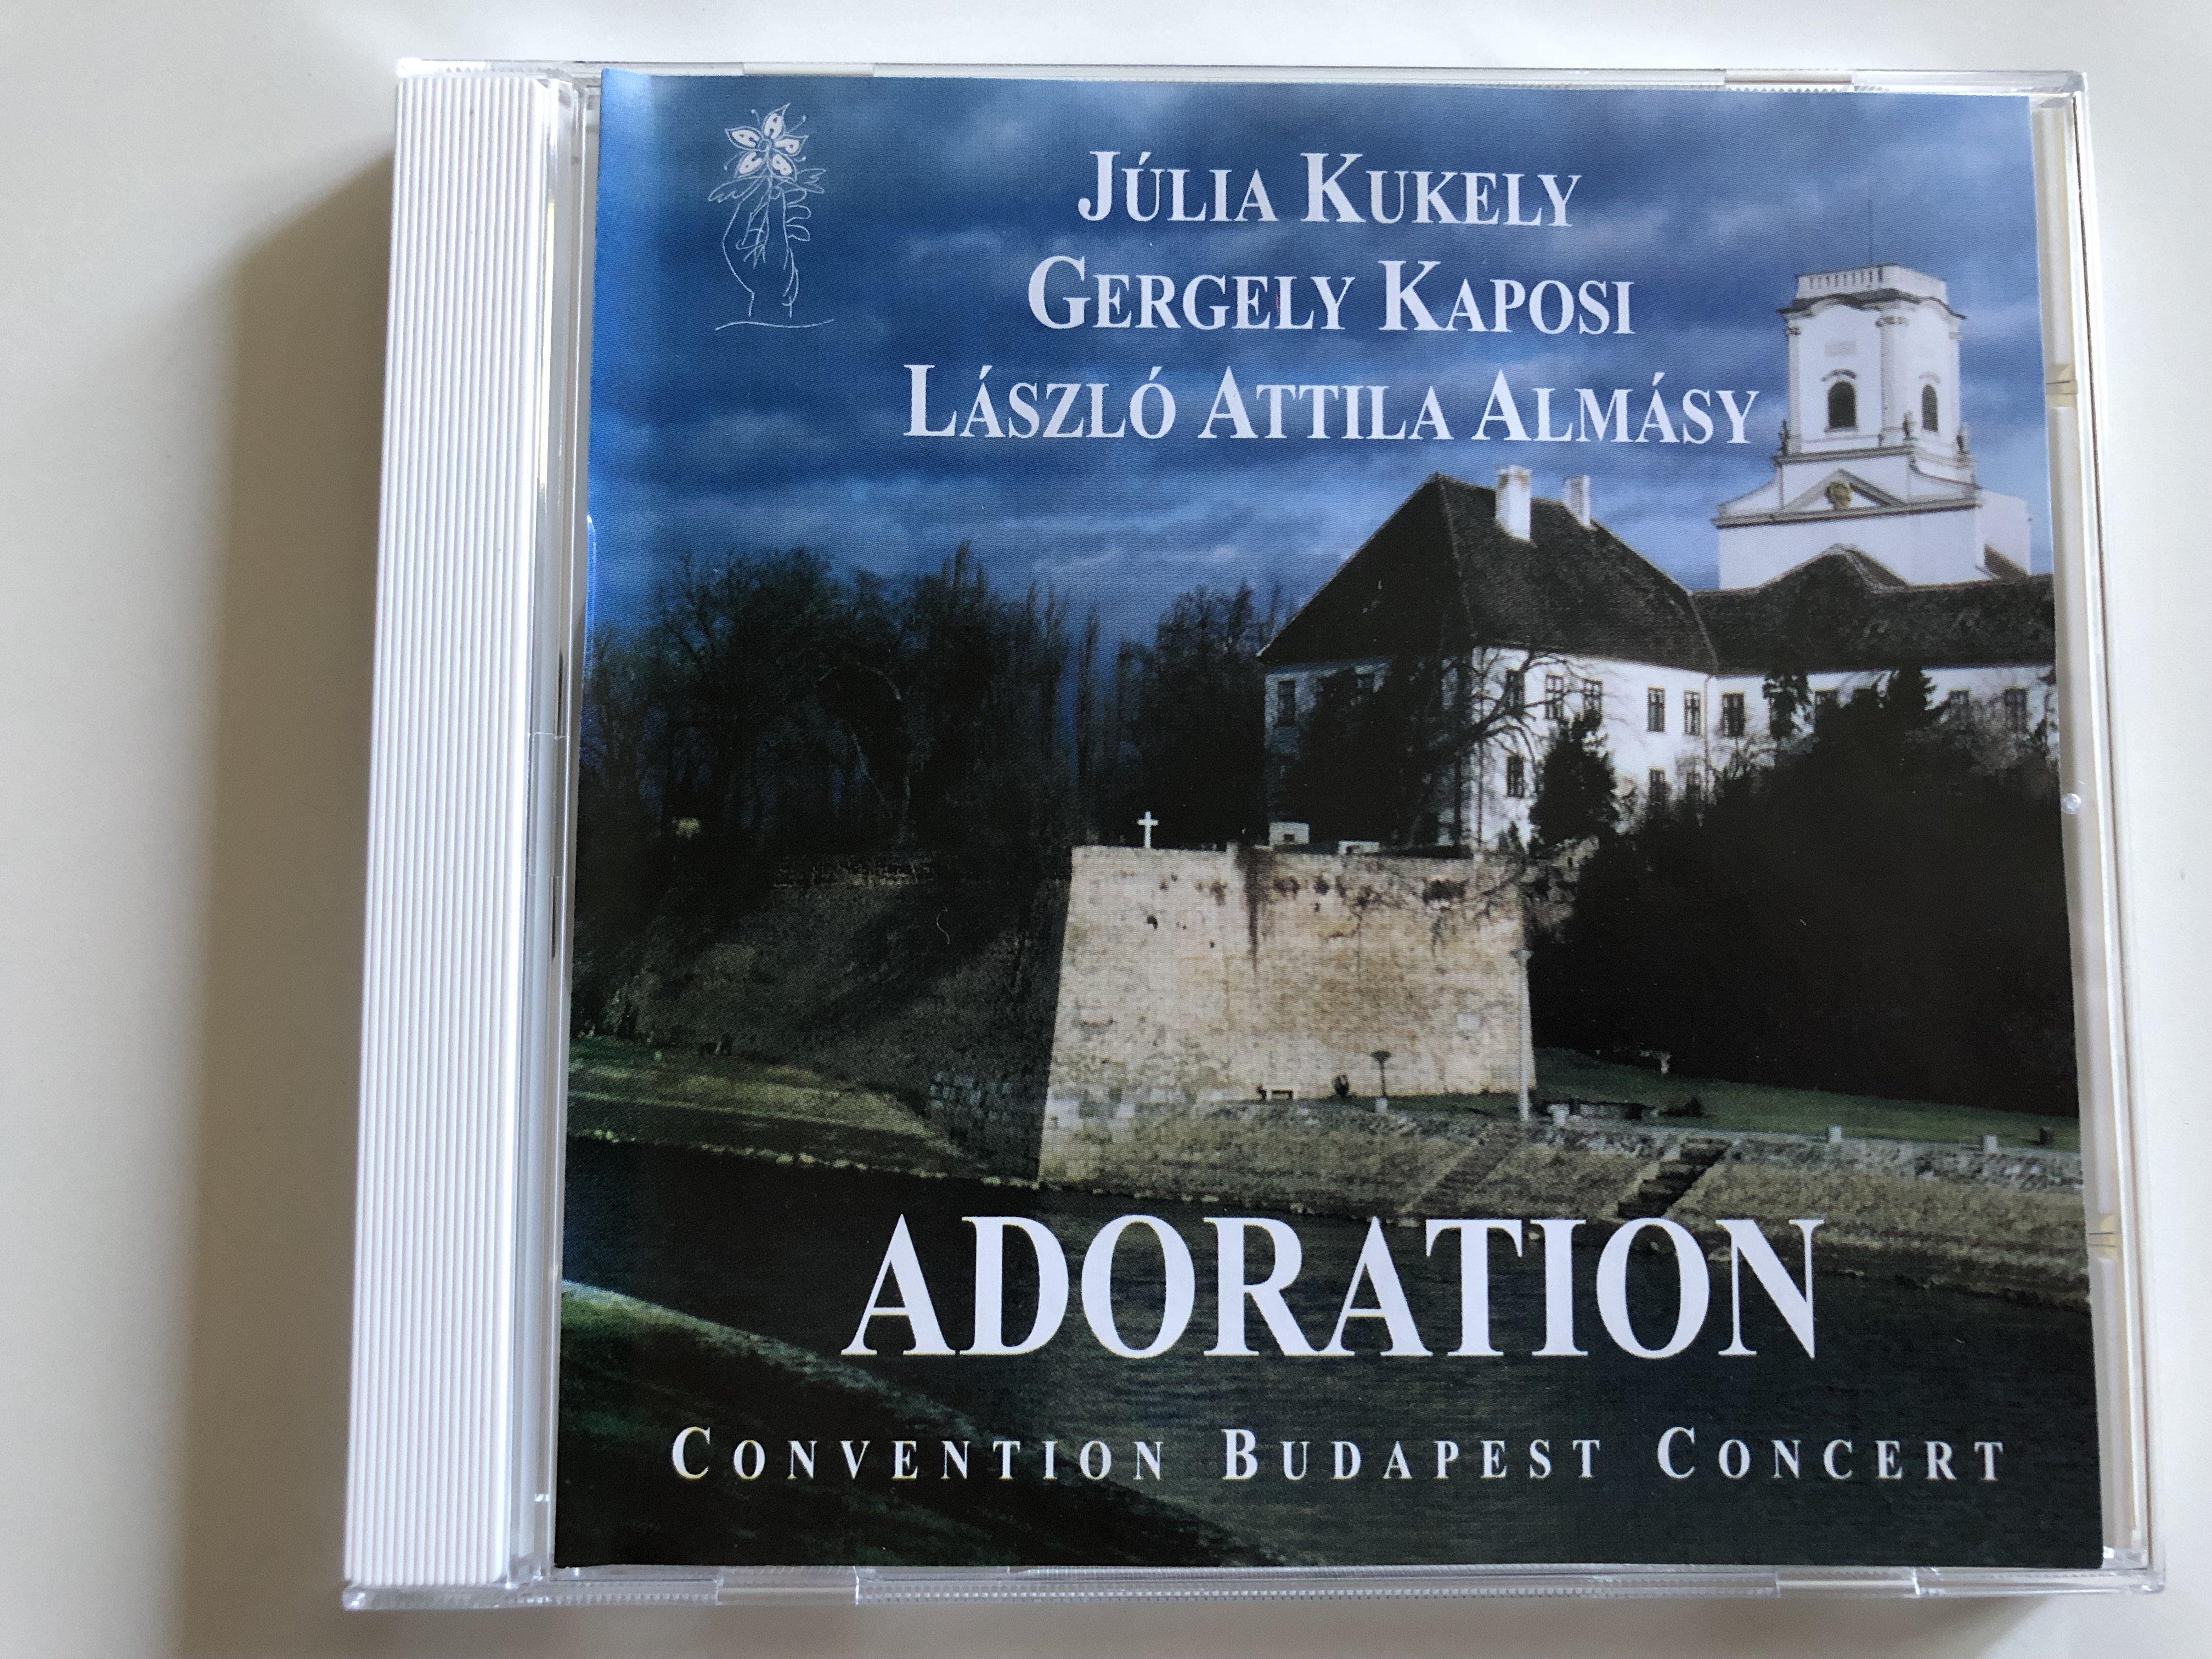 julia-kukely-gergely-kaposi-laszlo-attila-almasy-adoration-budapest-convention-audio-cd-1998-cbp-001-1-.jpg